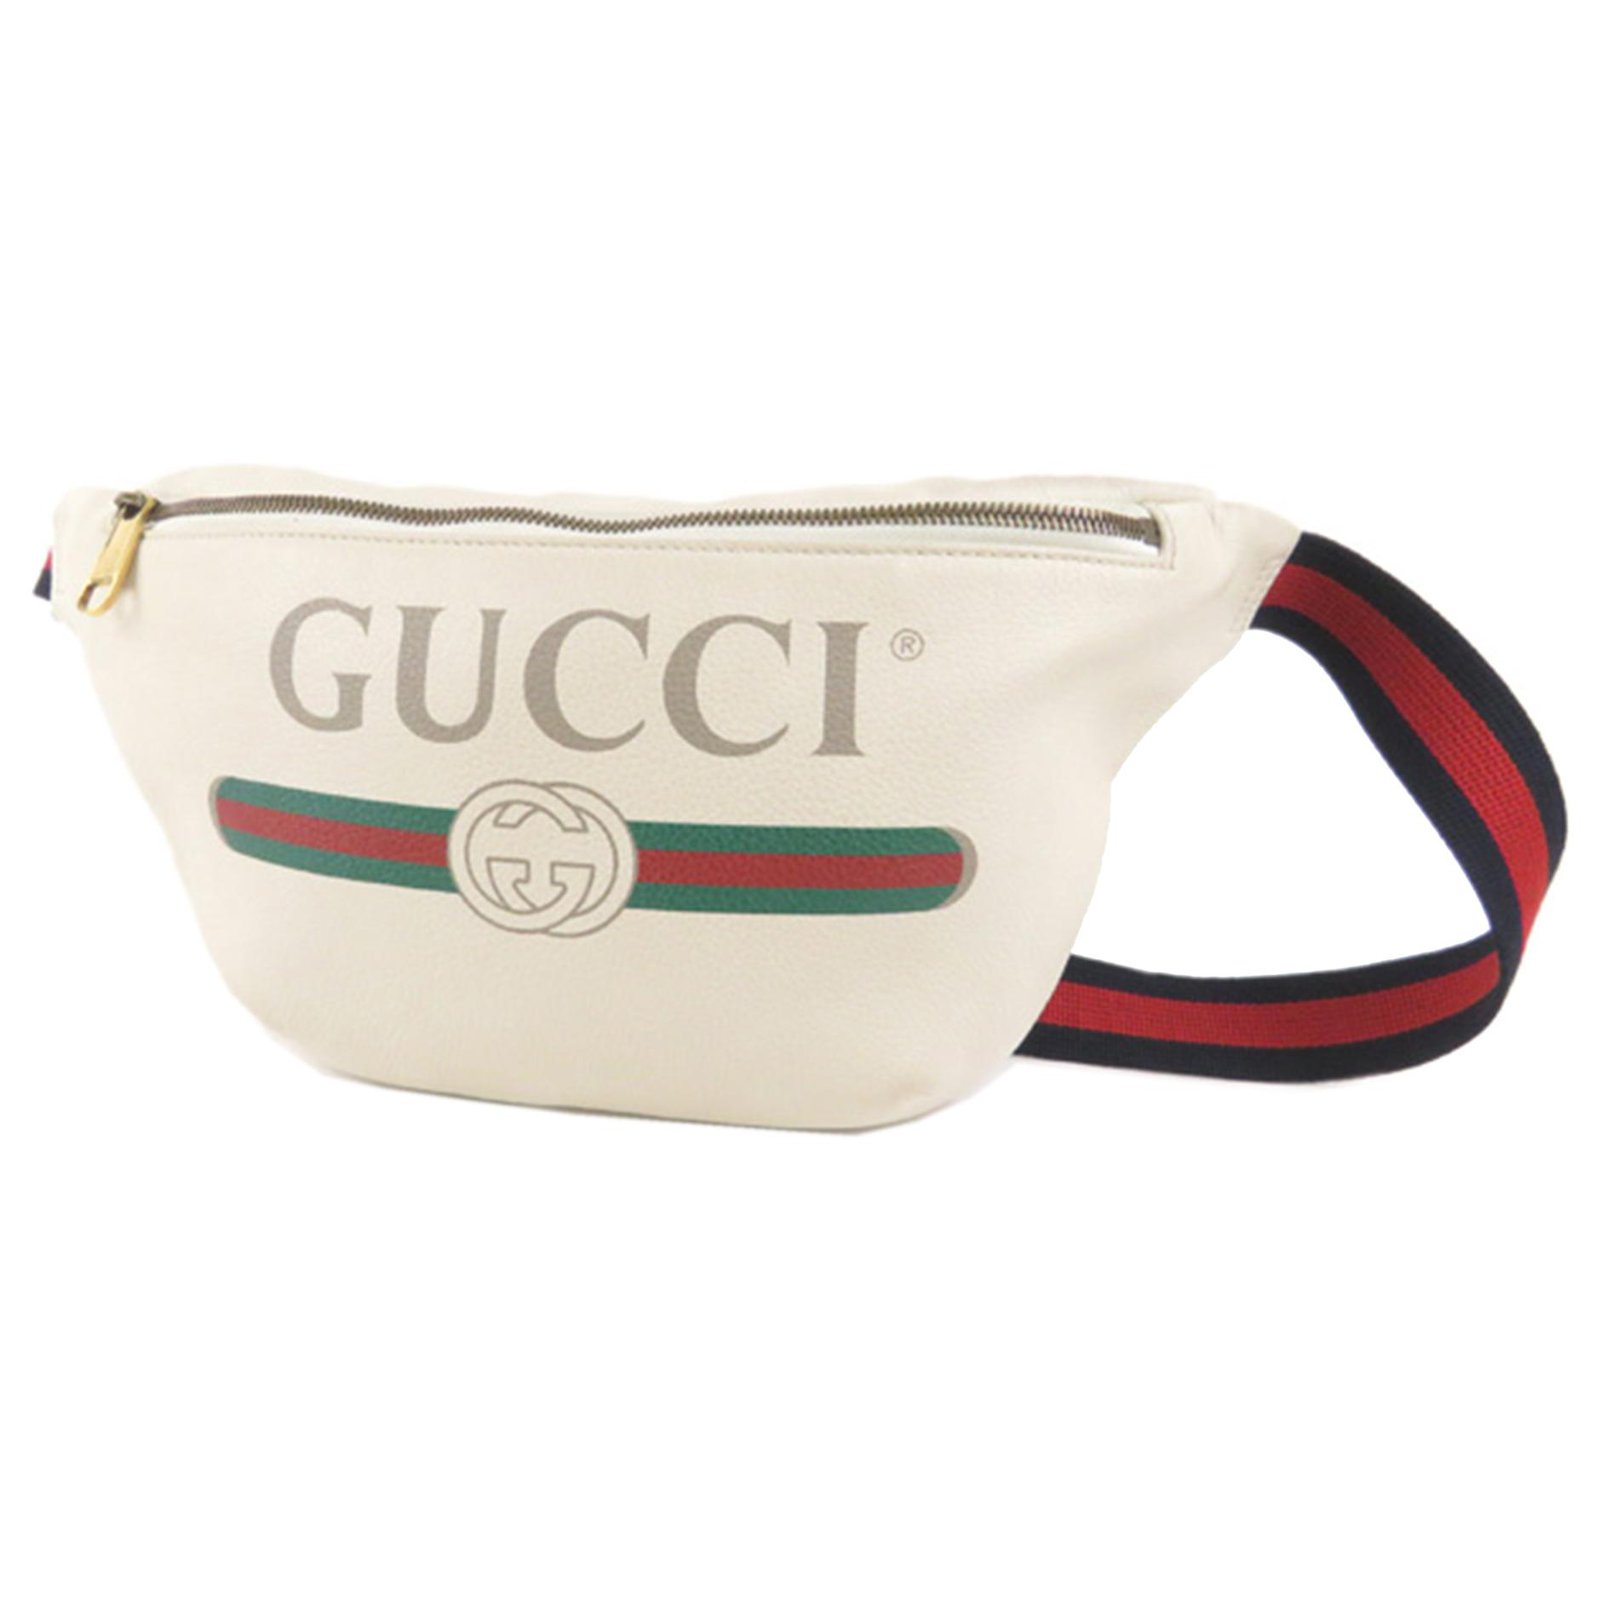 gucci logo waist bag